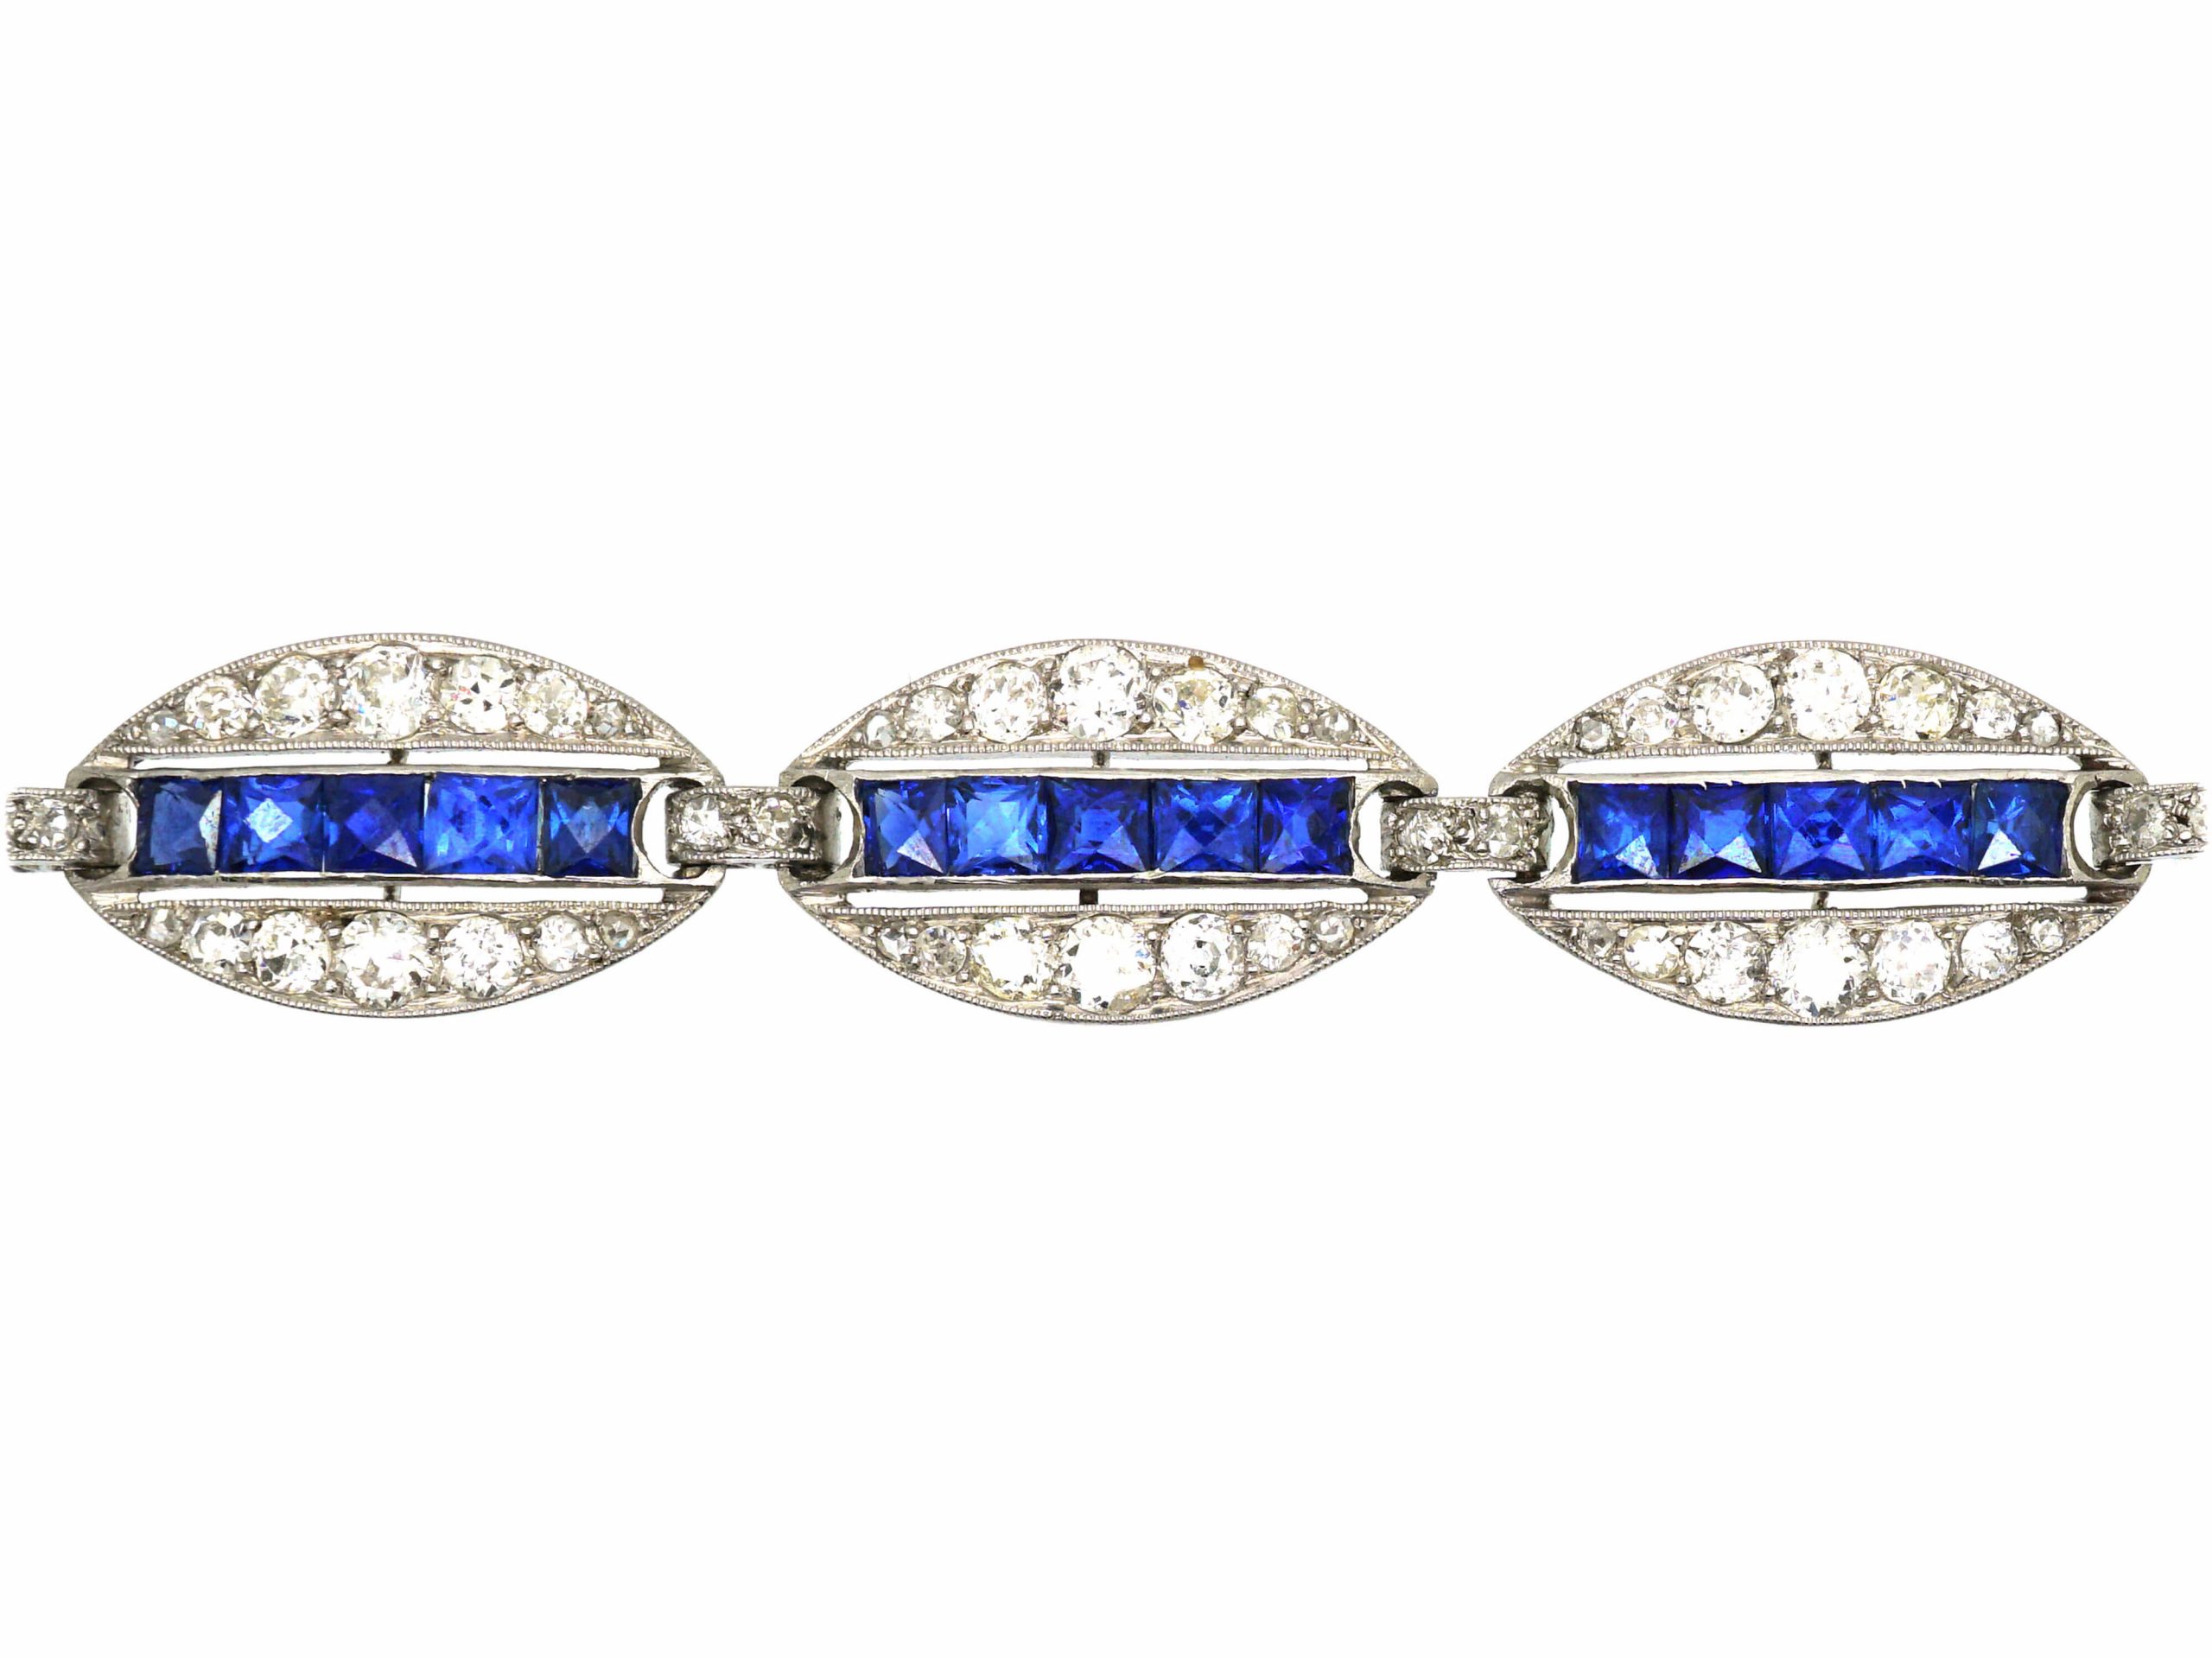 French Art Deco 18ct White Gold & Platinum, Diamond & Unheated Sapphire Elliptical Design Bracelet by Edouard Caen